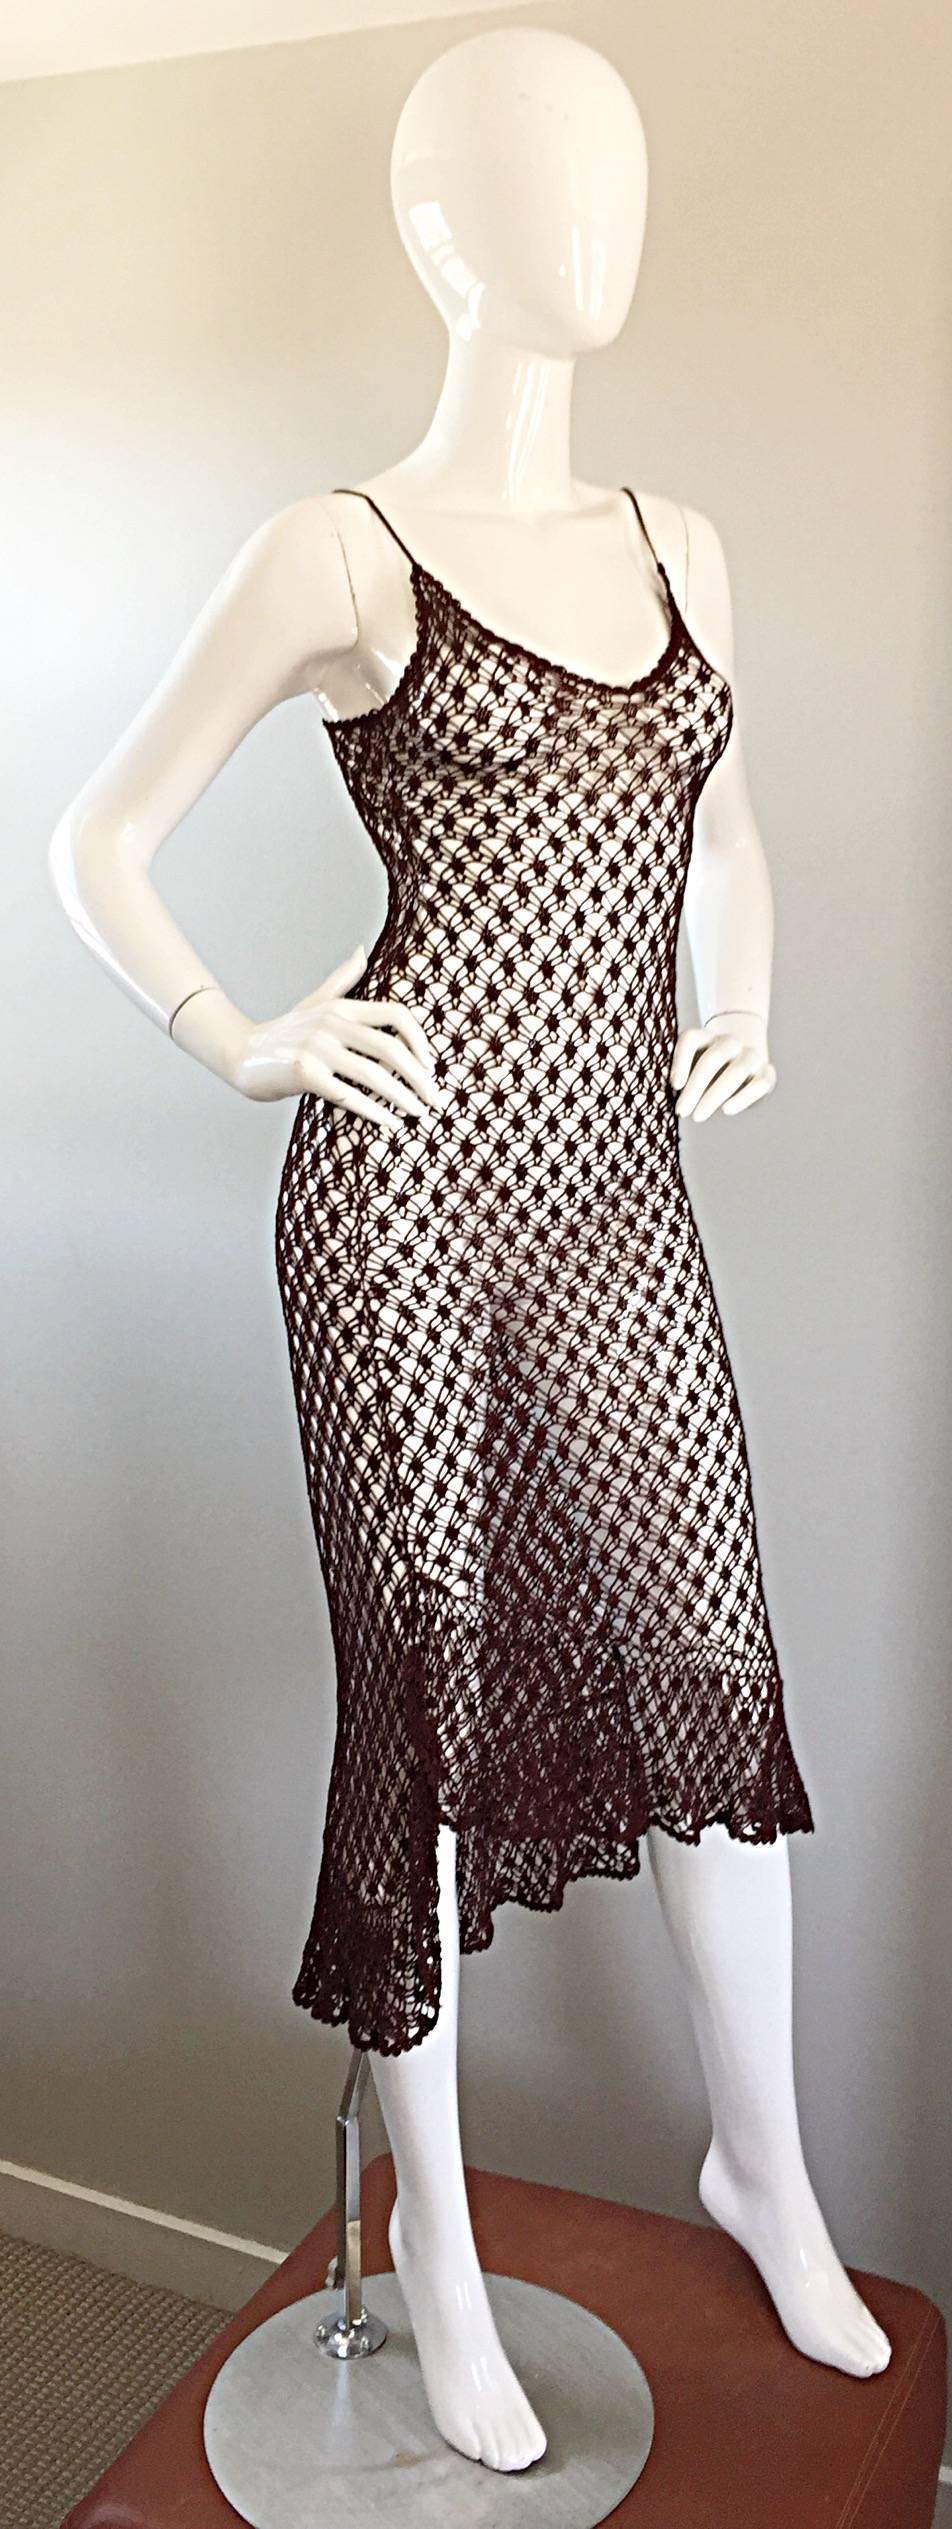 70s crochet dress